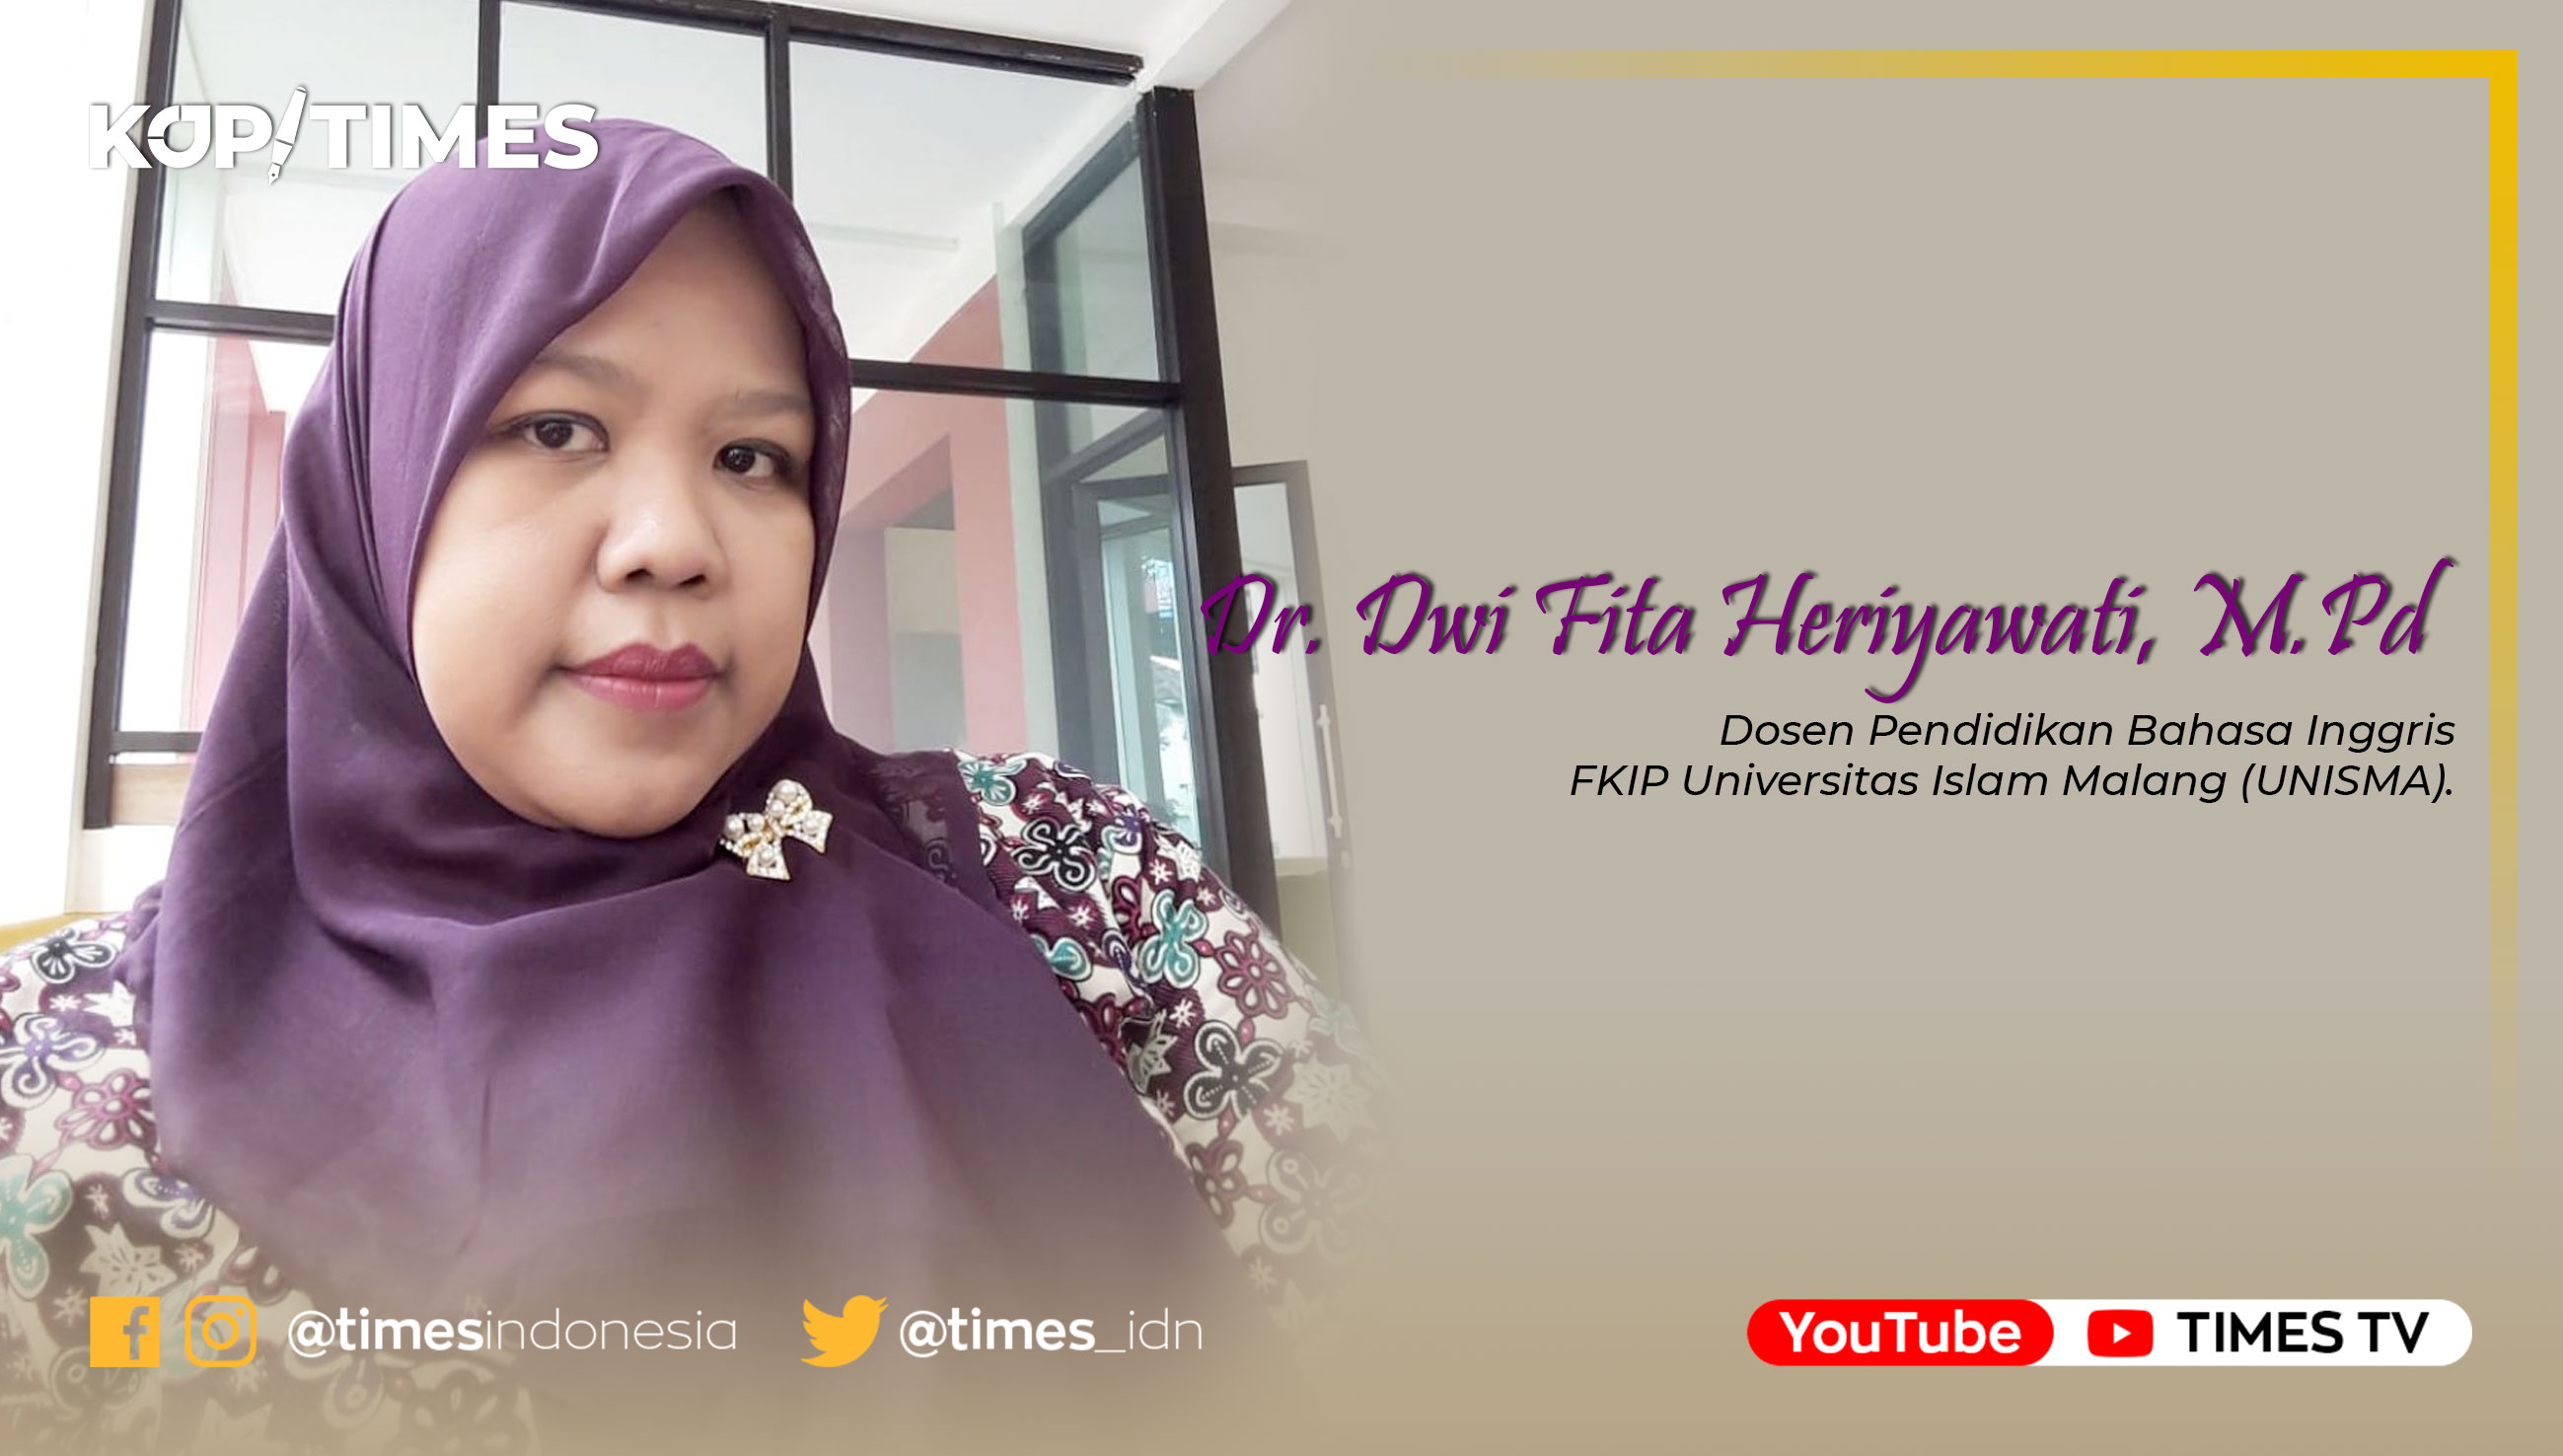 Dr. Dwi Fita Heriyawati, M.Pd, Dosen Pendidikan Bahasa Inggris, FKIP Universitas Islam Malang (UNISMA).